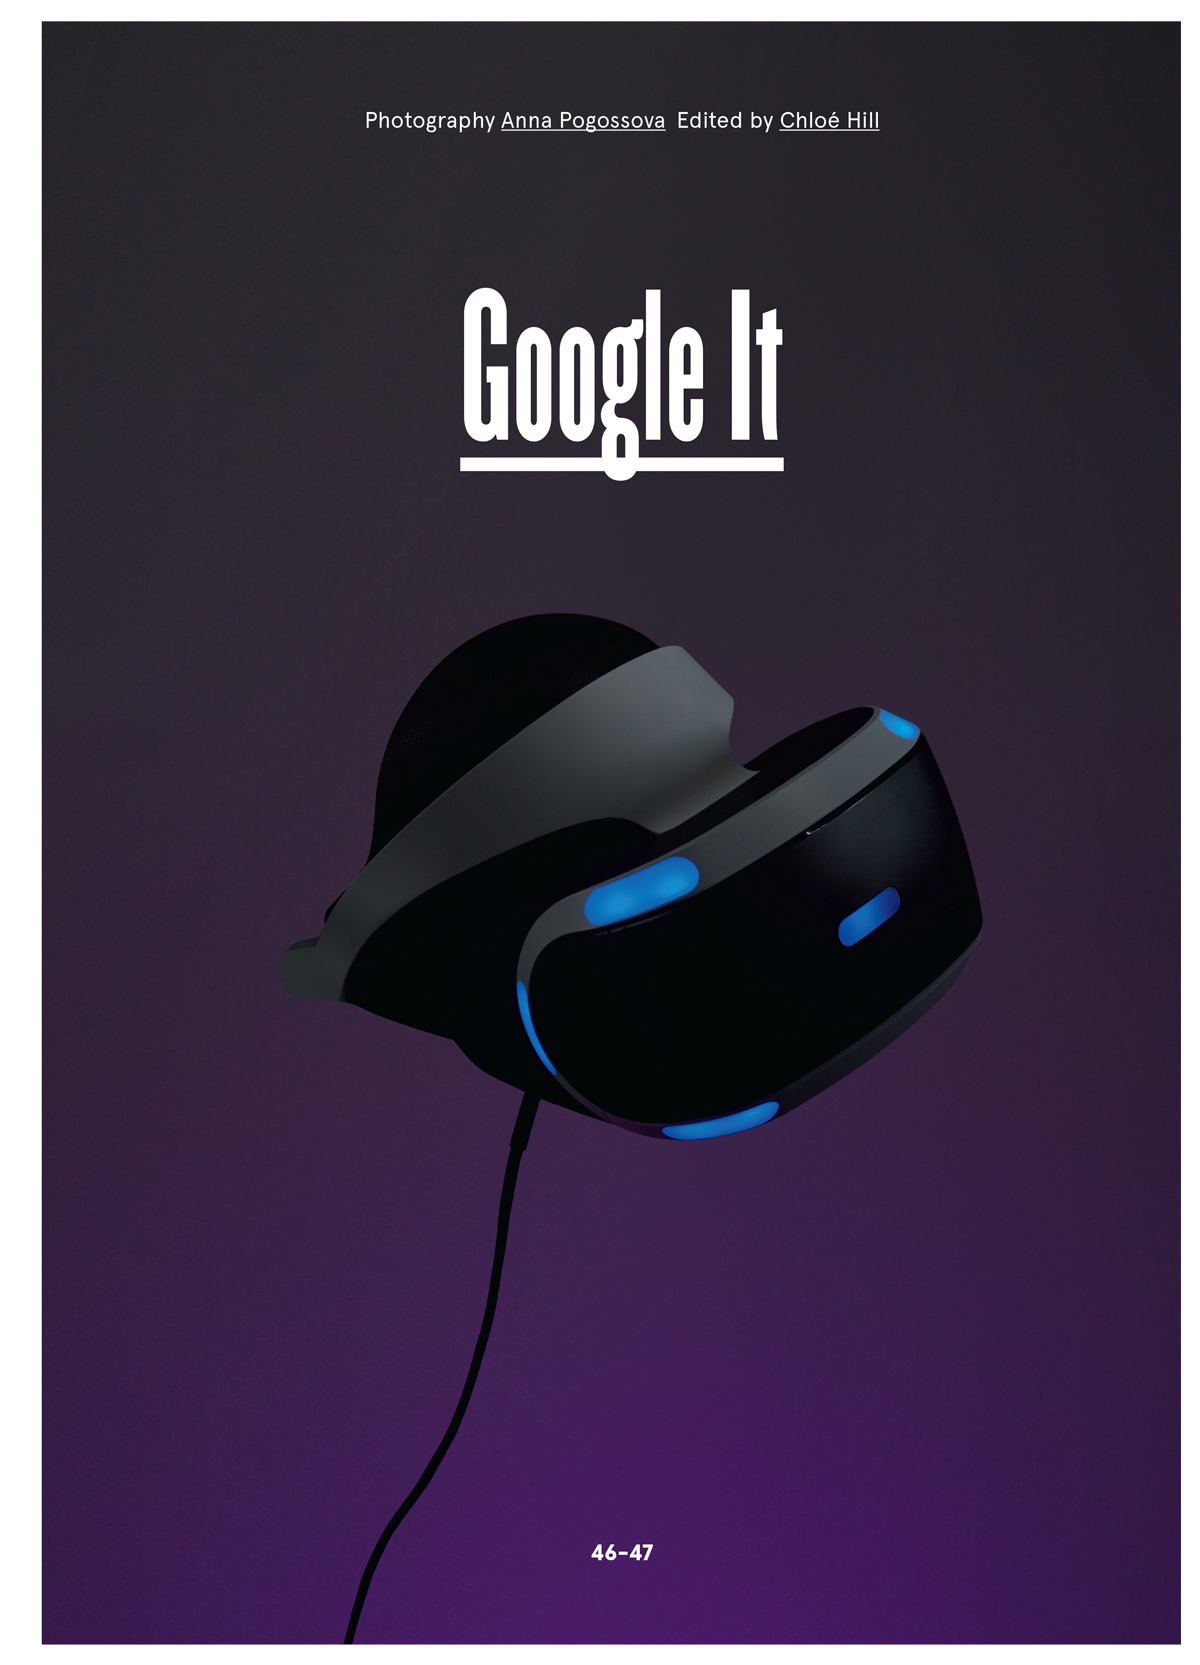 Playstation VR | Oyster Mag